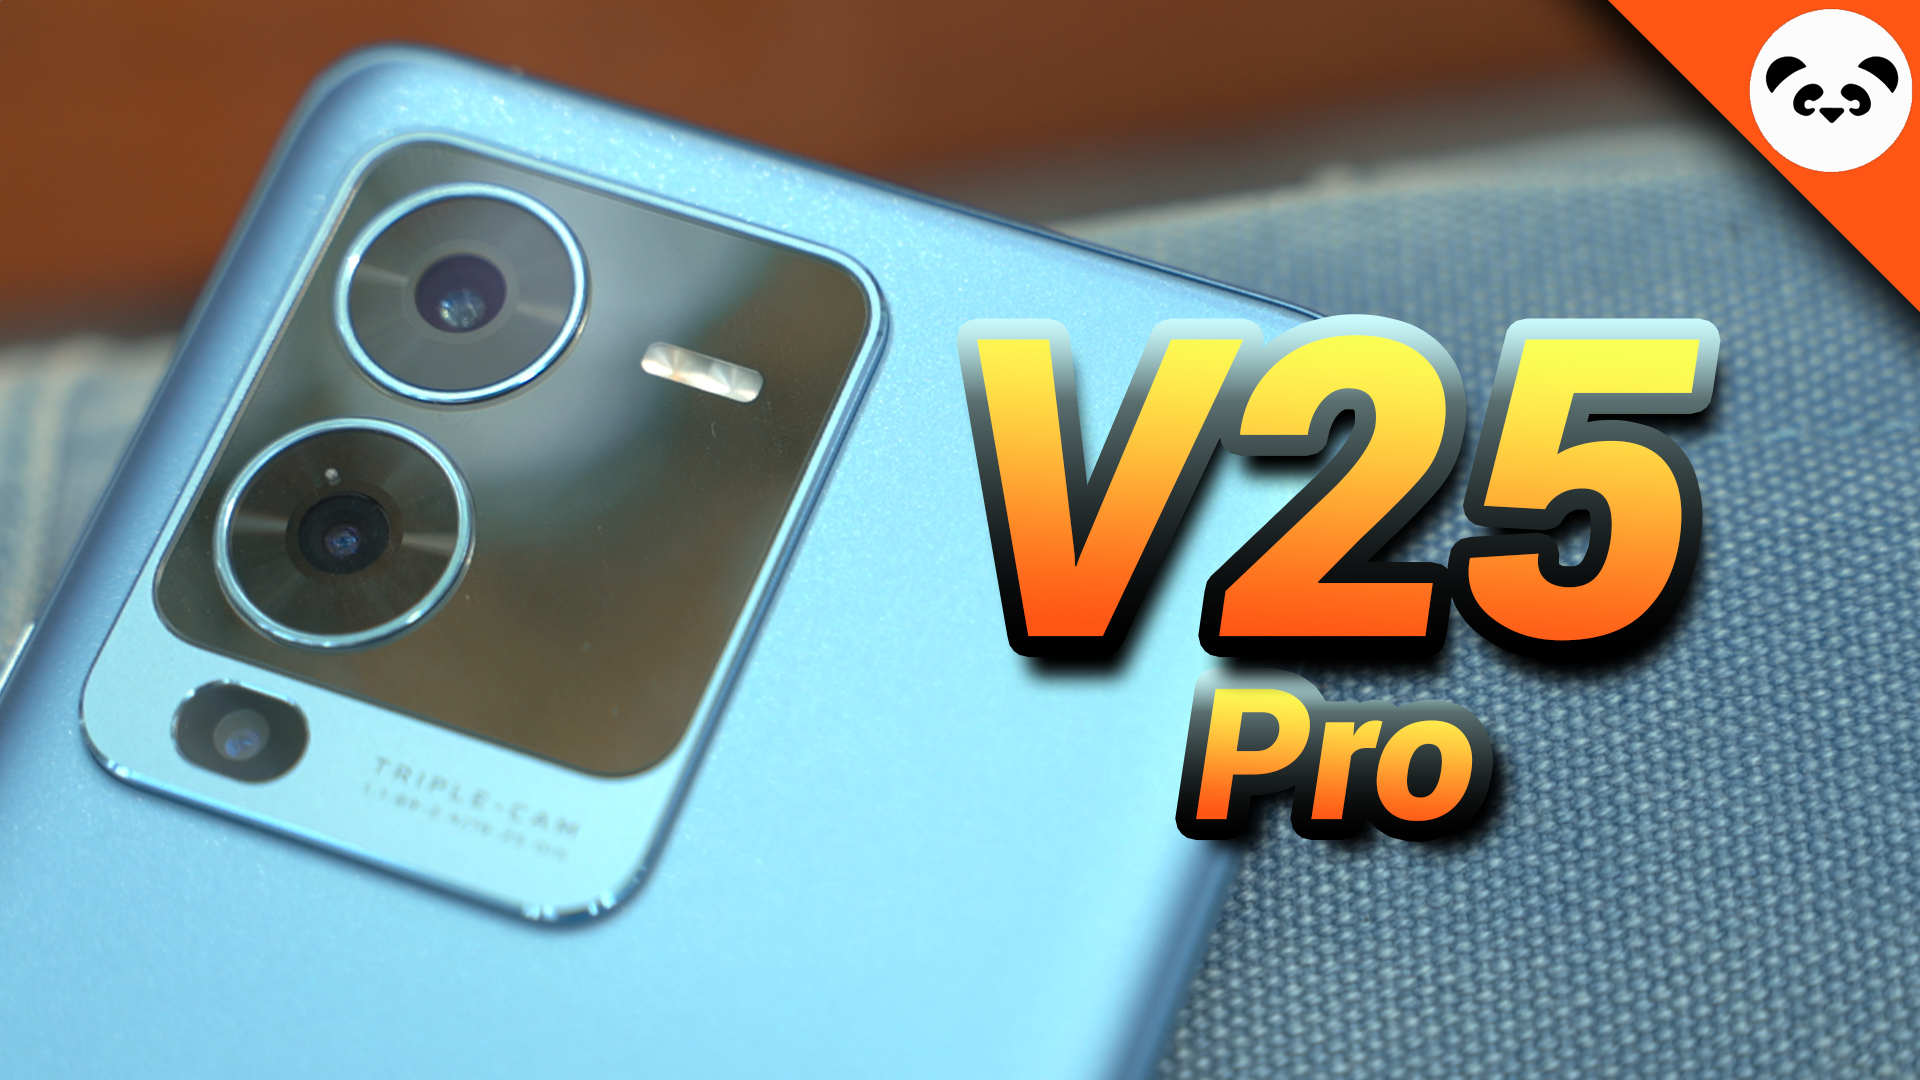 Vivo V25 Pro kommentteja-hyvä kamera ja vaihtelevat värit